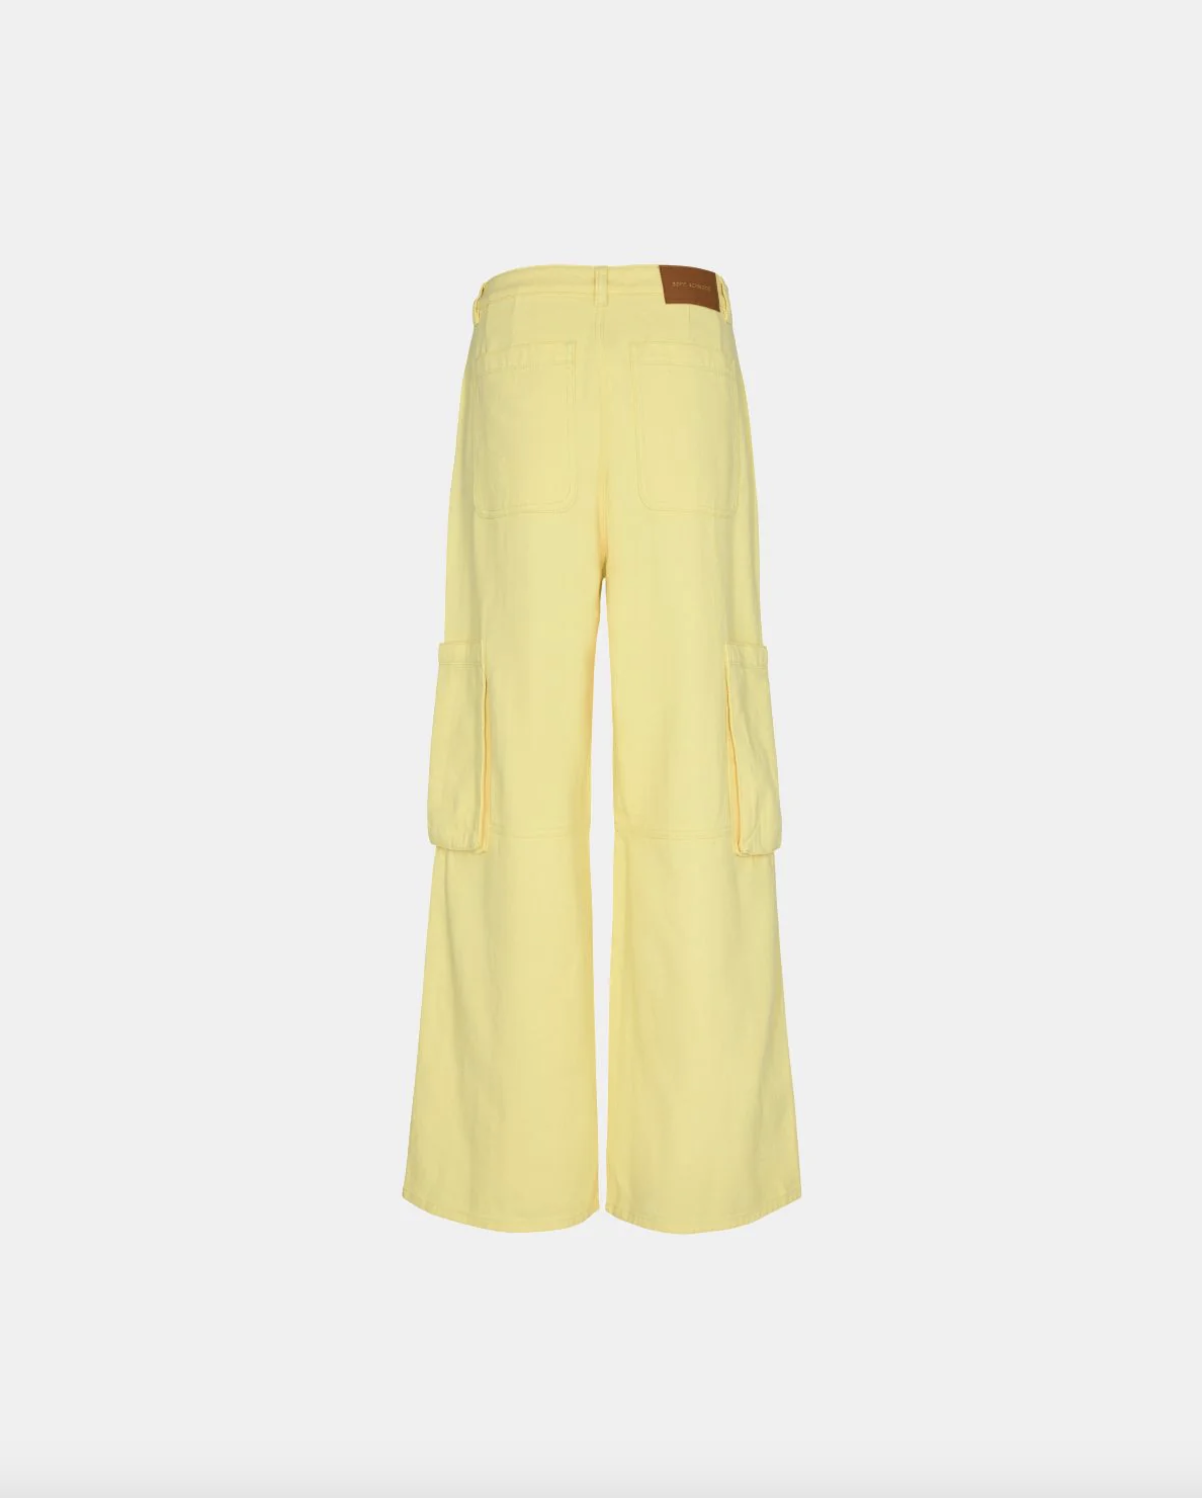 Buy Yellow Trousers  Pants for Women by BUYNEWTREND Online  Ajiocom